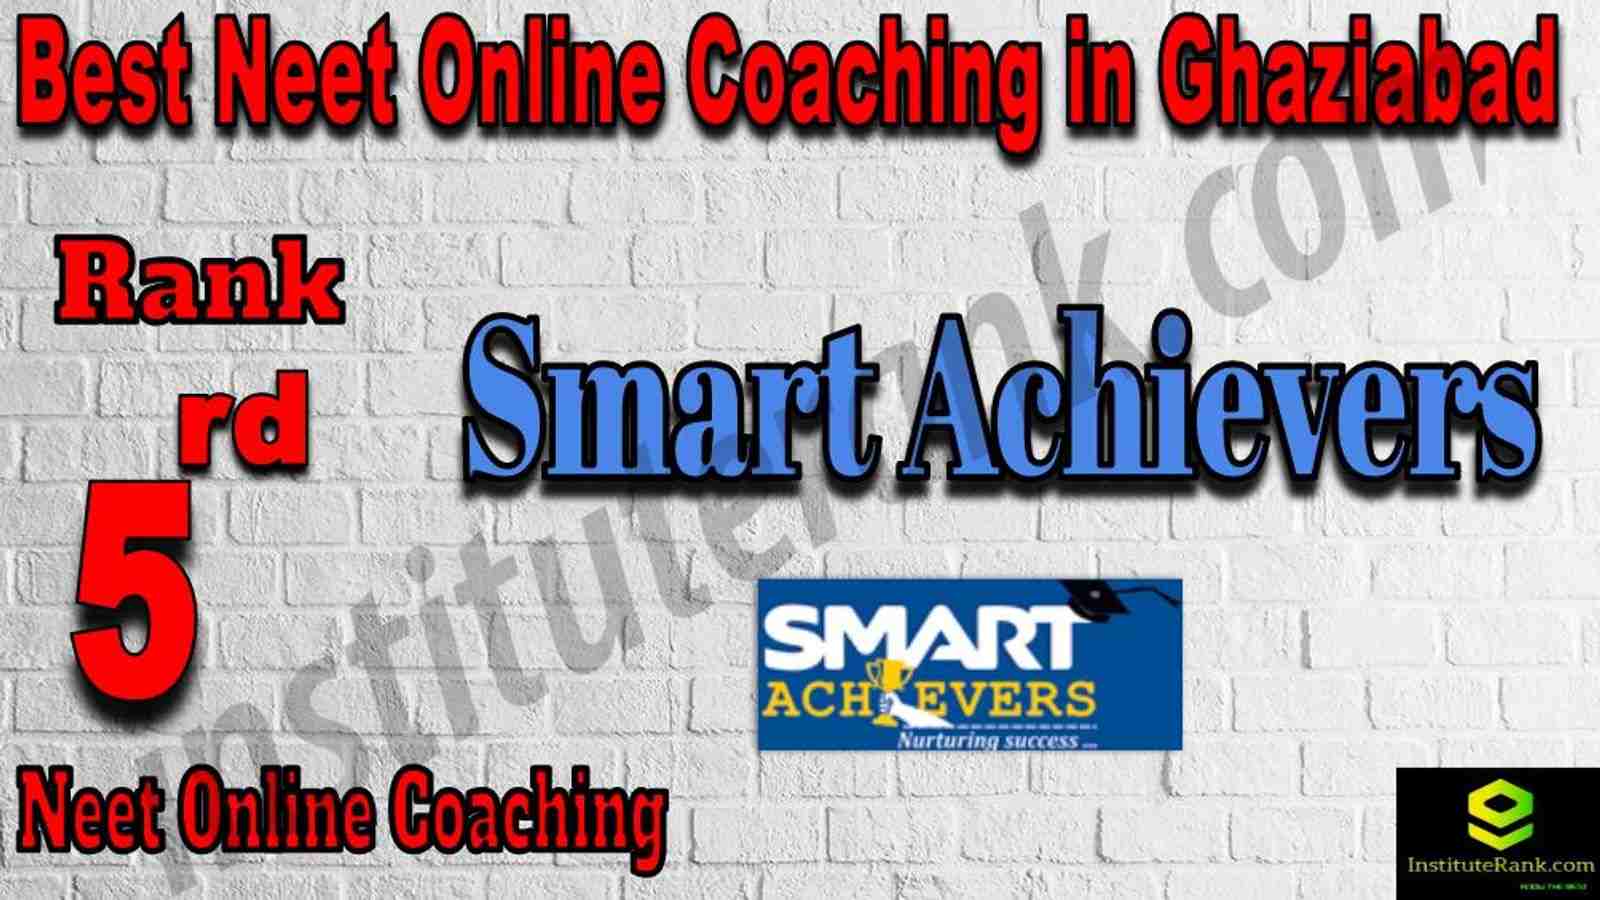 5th Best Neet Online Coaching in Ghaziabad